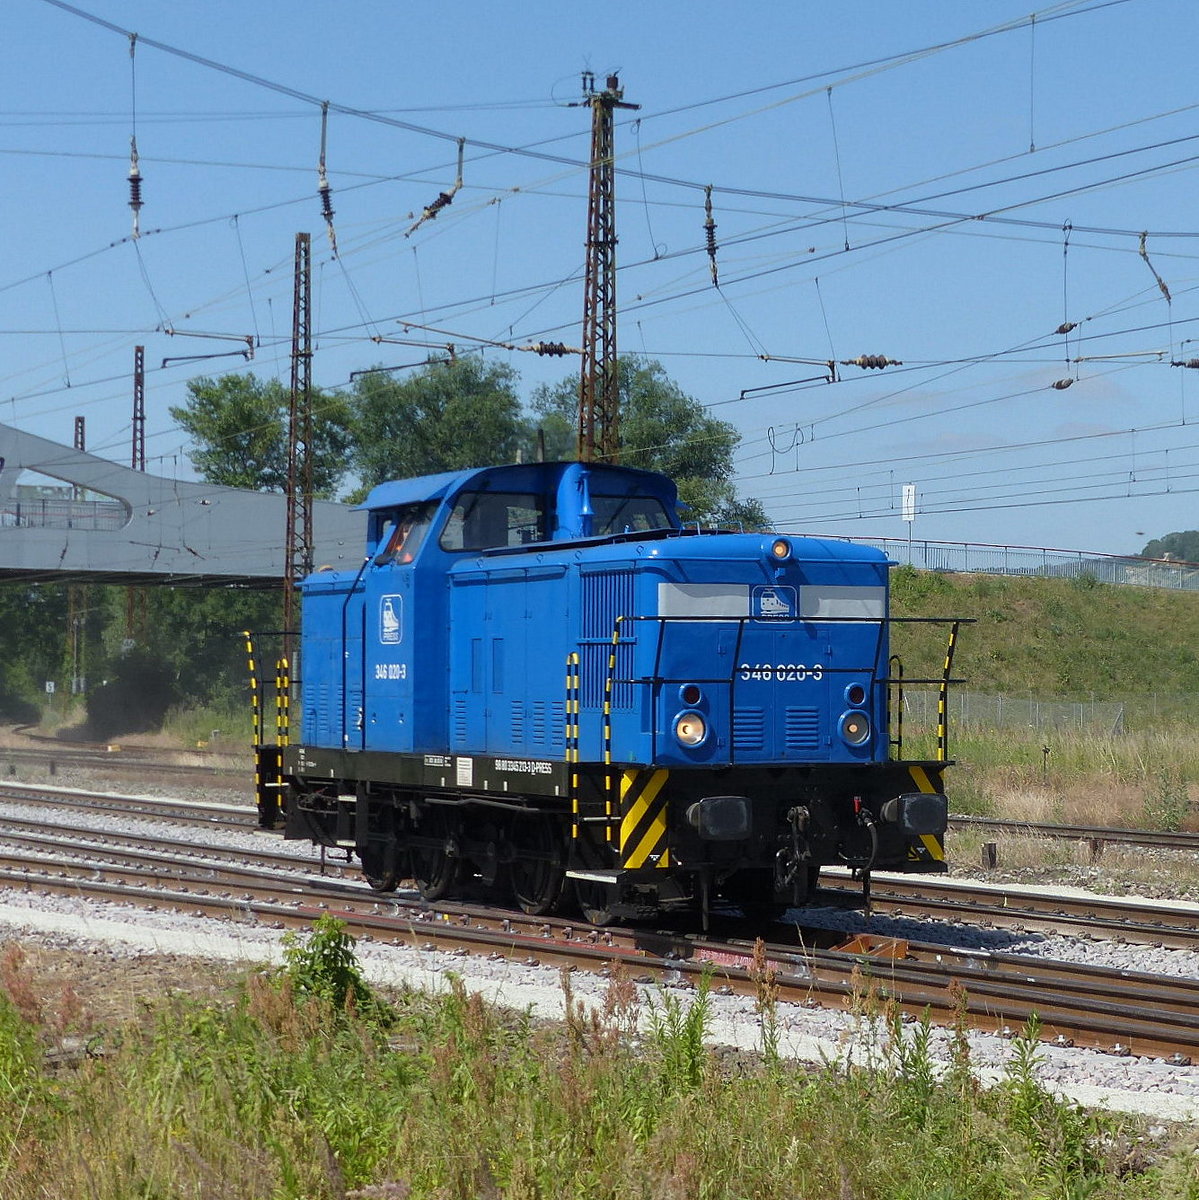 PRESS 346 020-3 als Tfzf Richtung Grokorbetha, am 28.06.2019 in Naumburg Hbf.